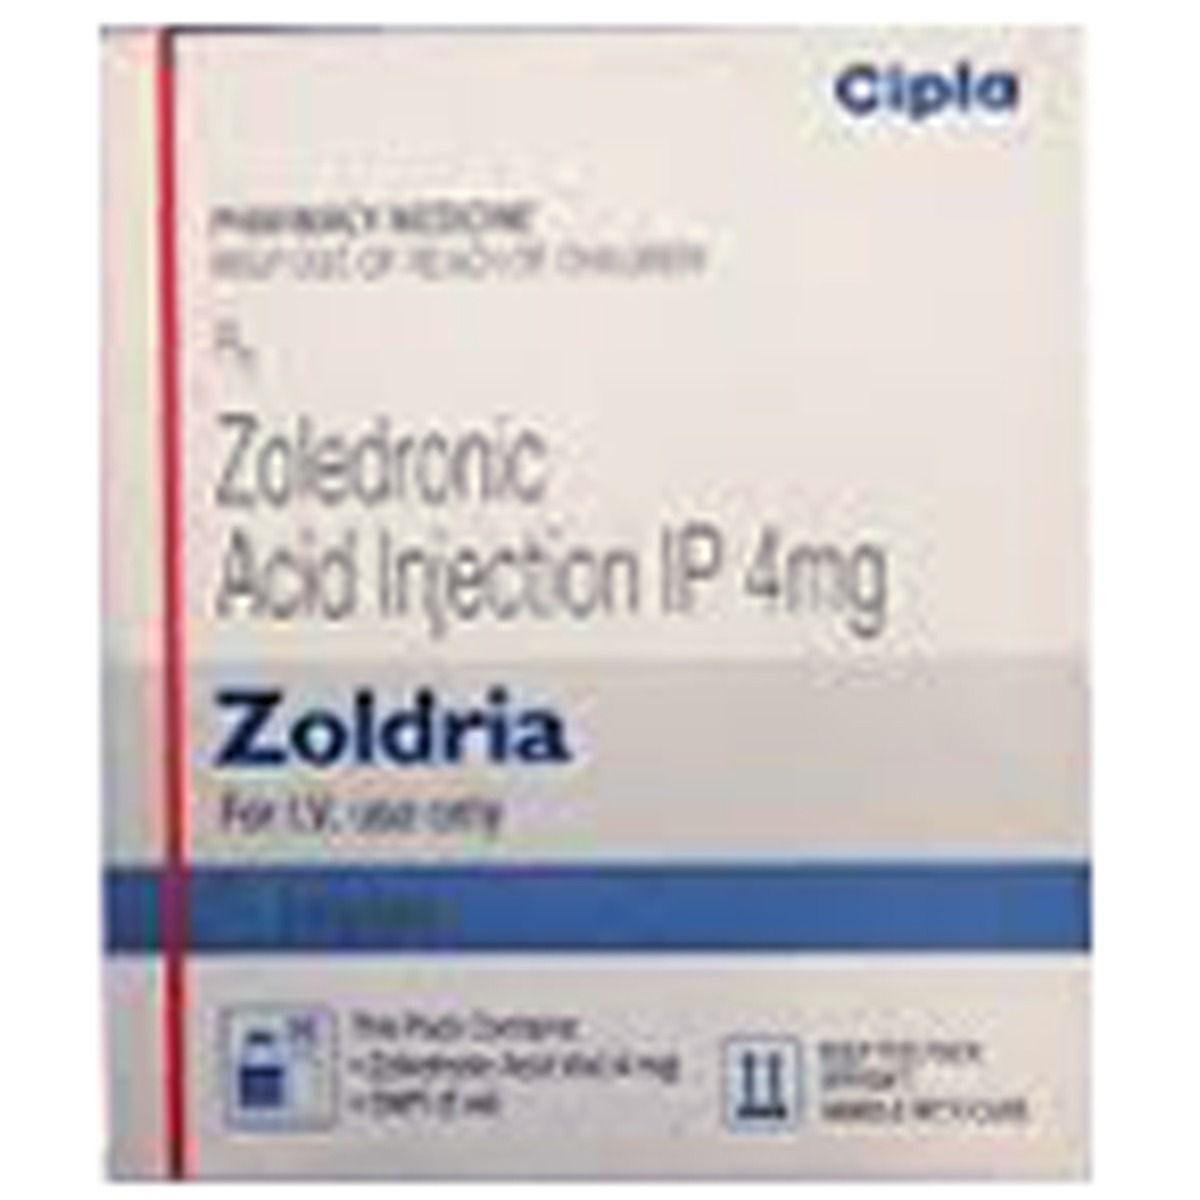 Buy Zoldria 4mg Injection 5 ml Online